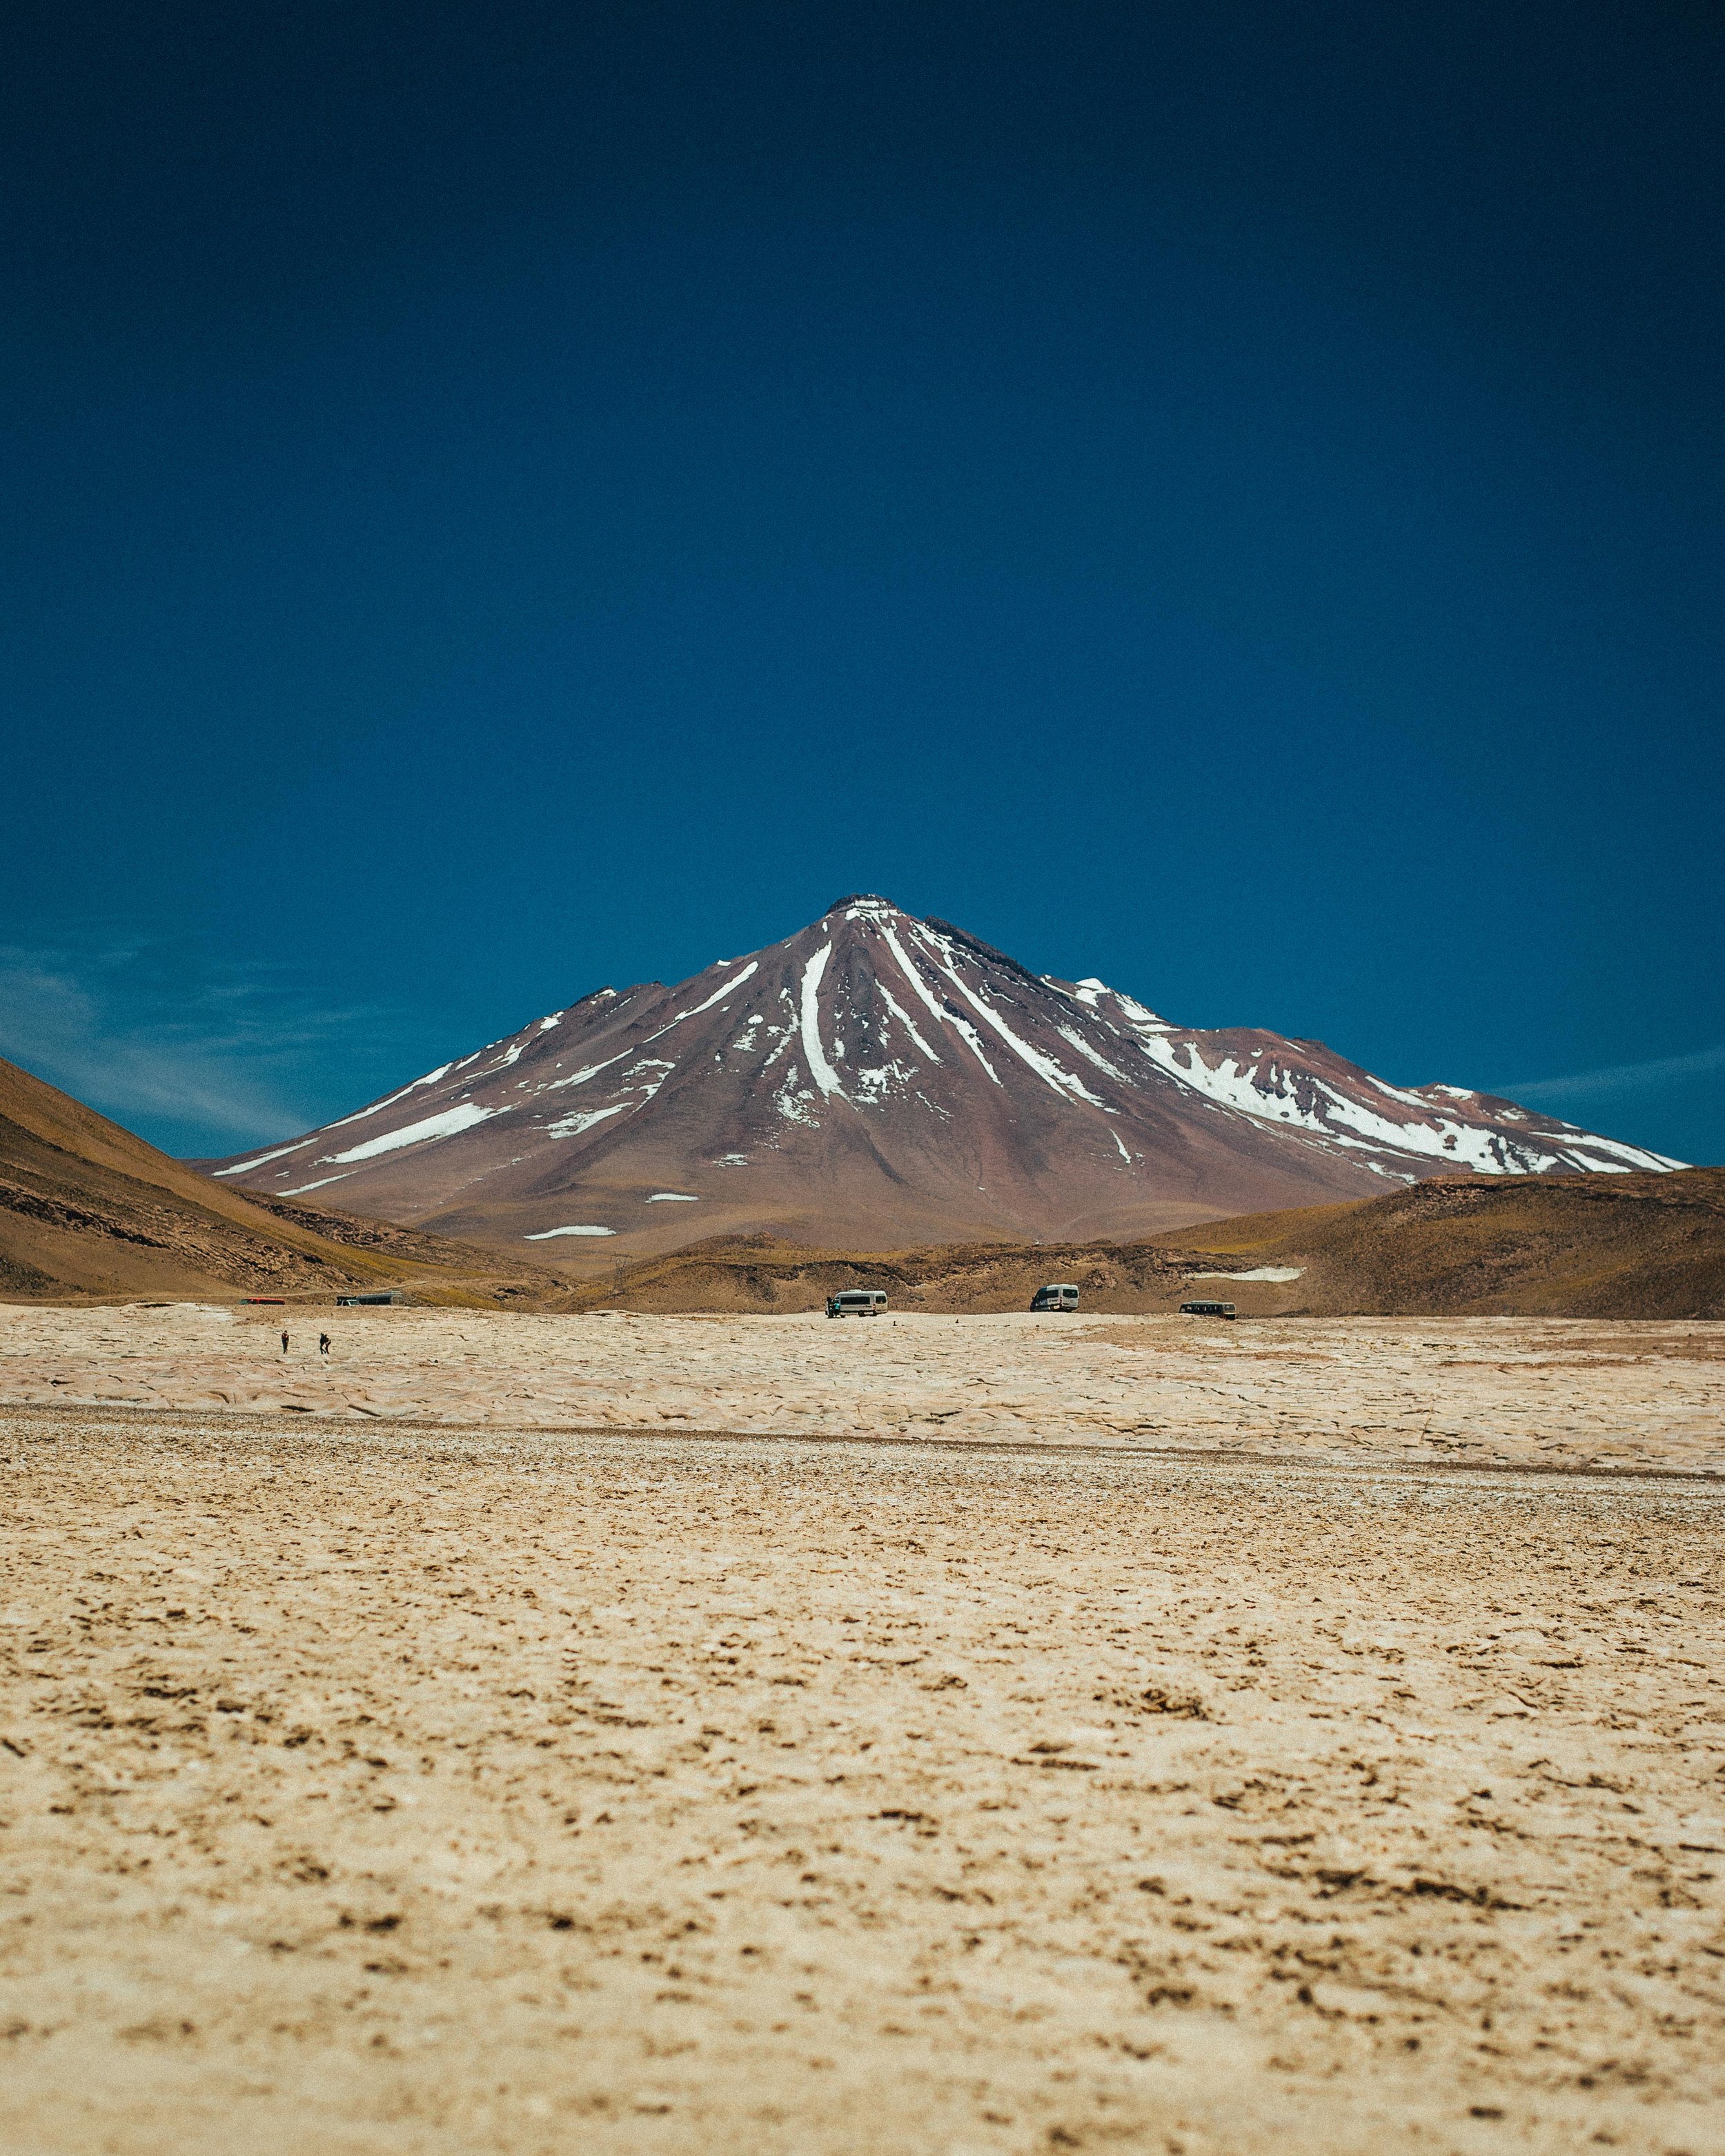  Atacama Desert | Chile 